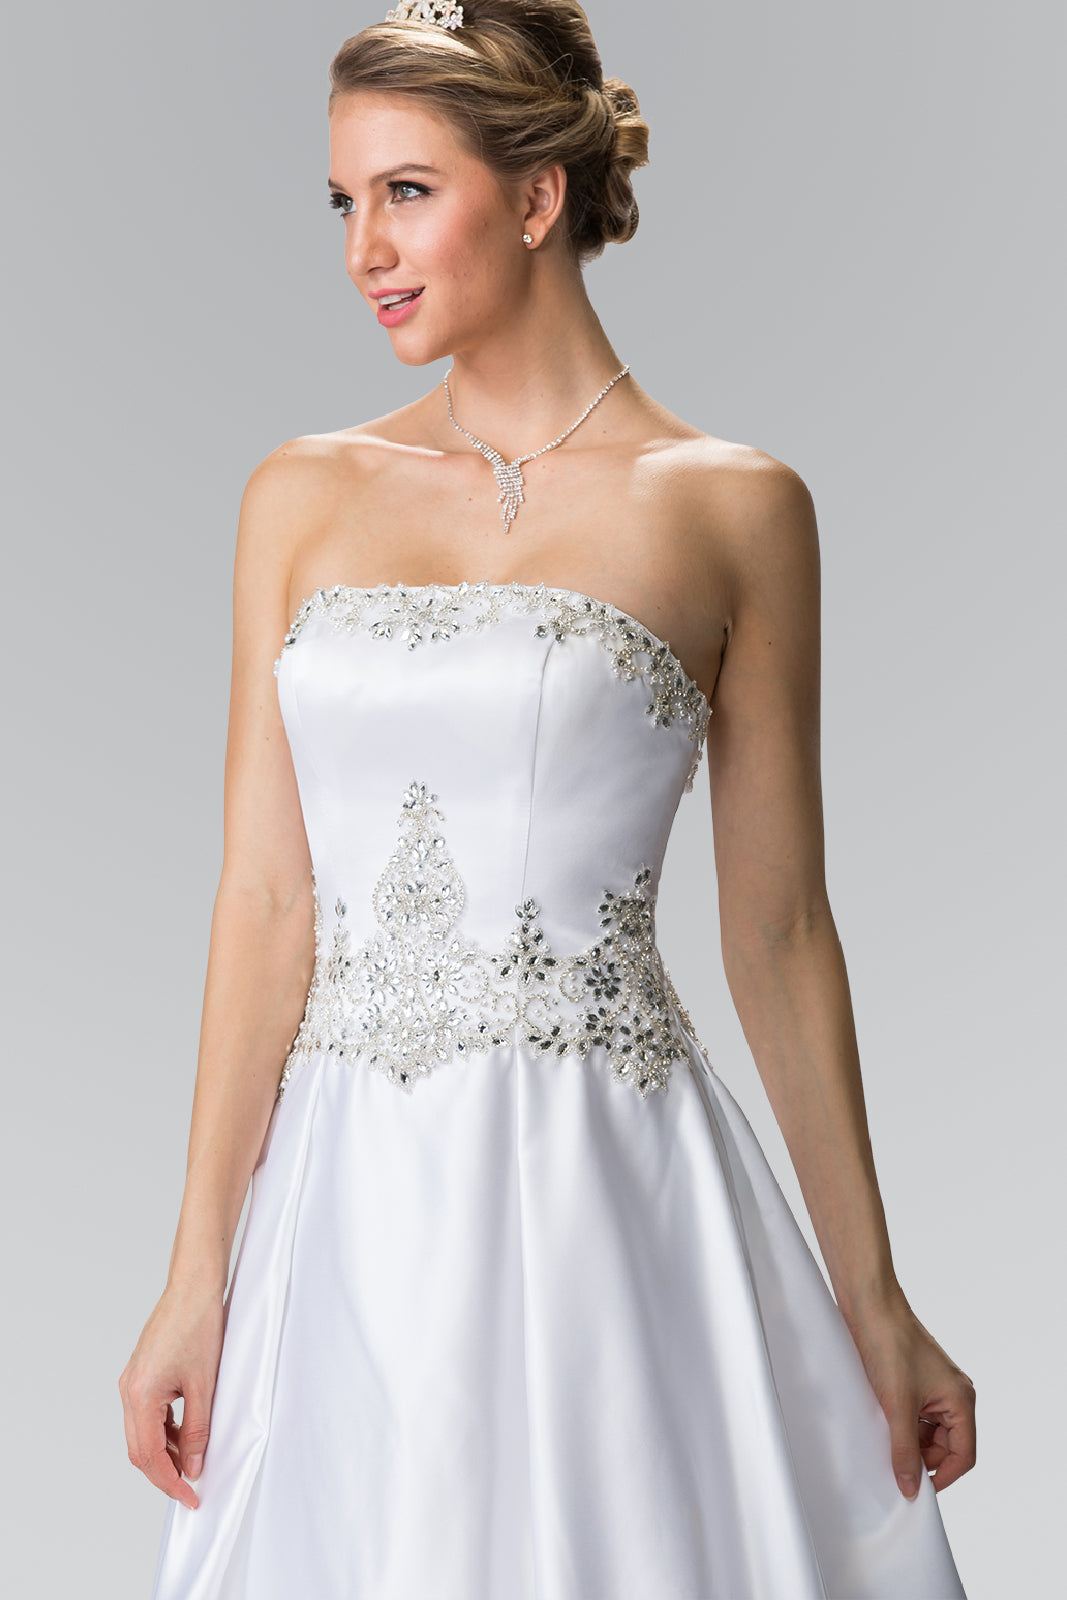 White_2 Satin Strapless A-Line Women Bridal Gown - GL2201 GLS